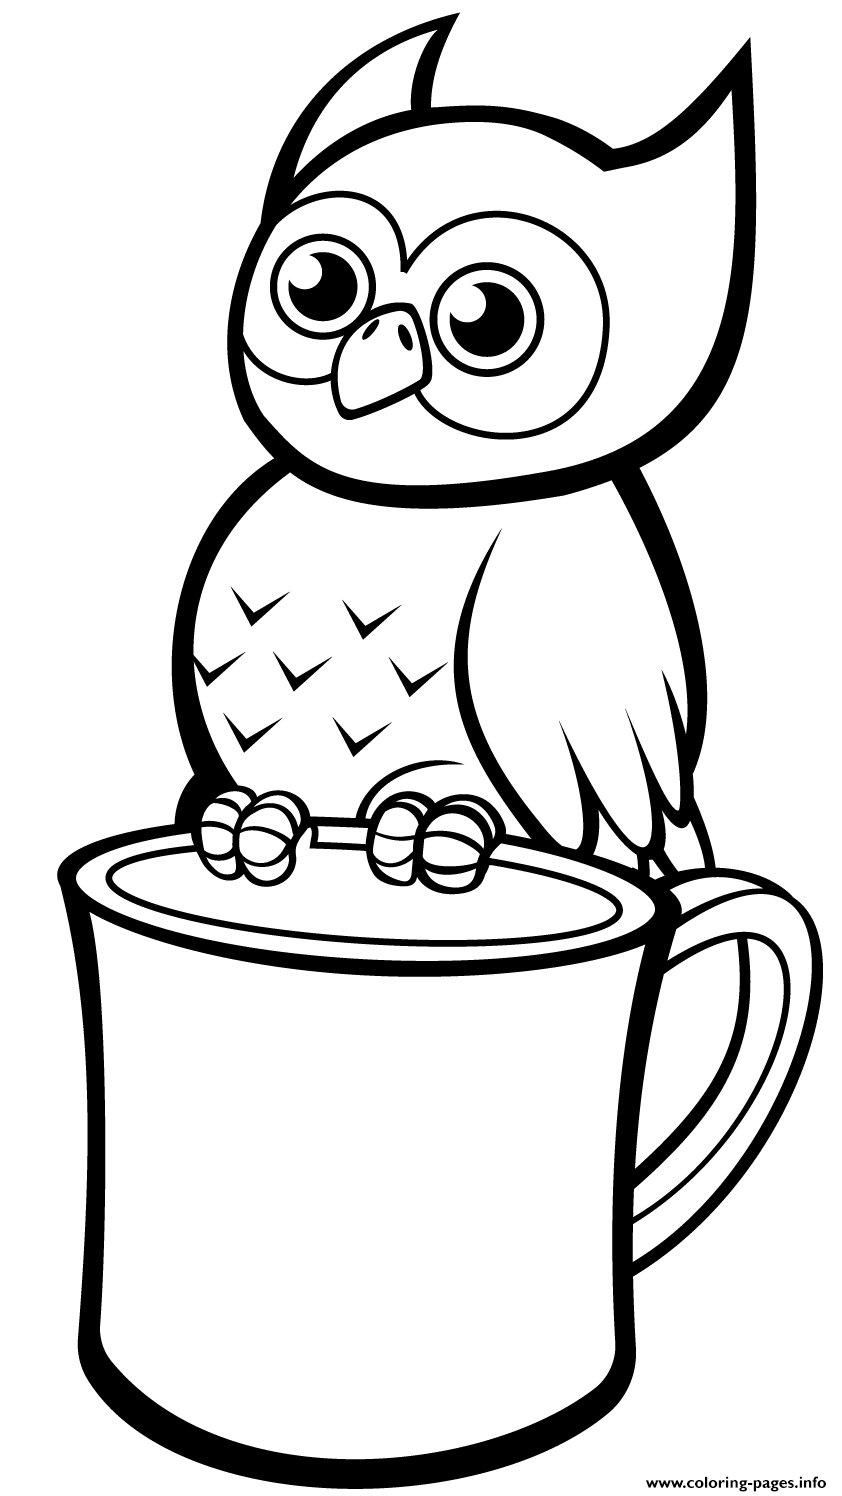 Cute Owl On A Mug coloring